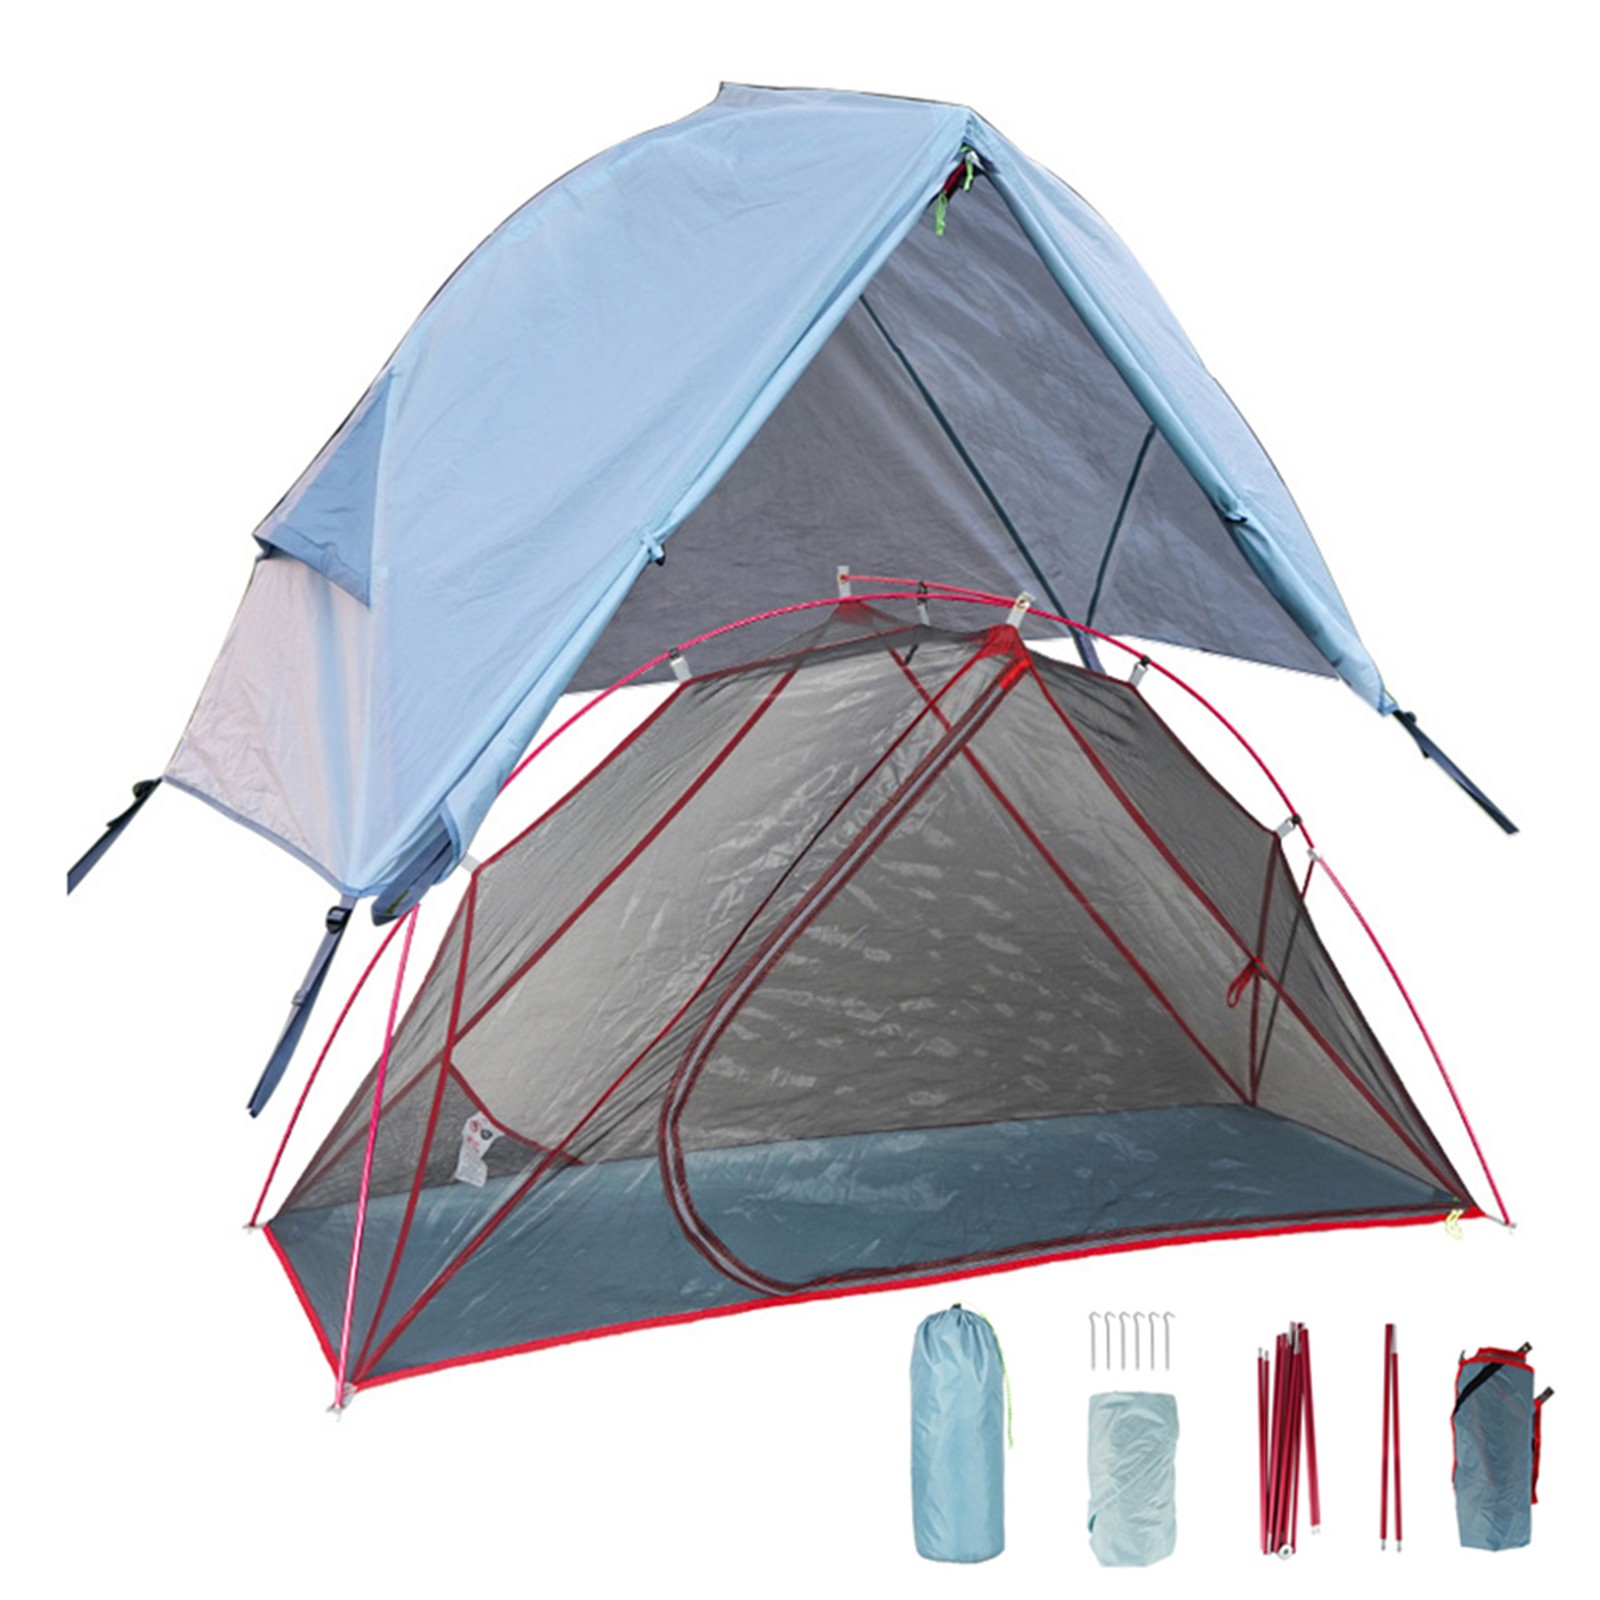 Elevated Outdoor Tent Shield Aluminum Alloy Poles Convenient Storage Bag